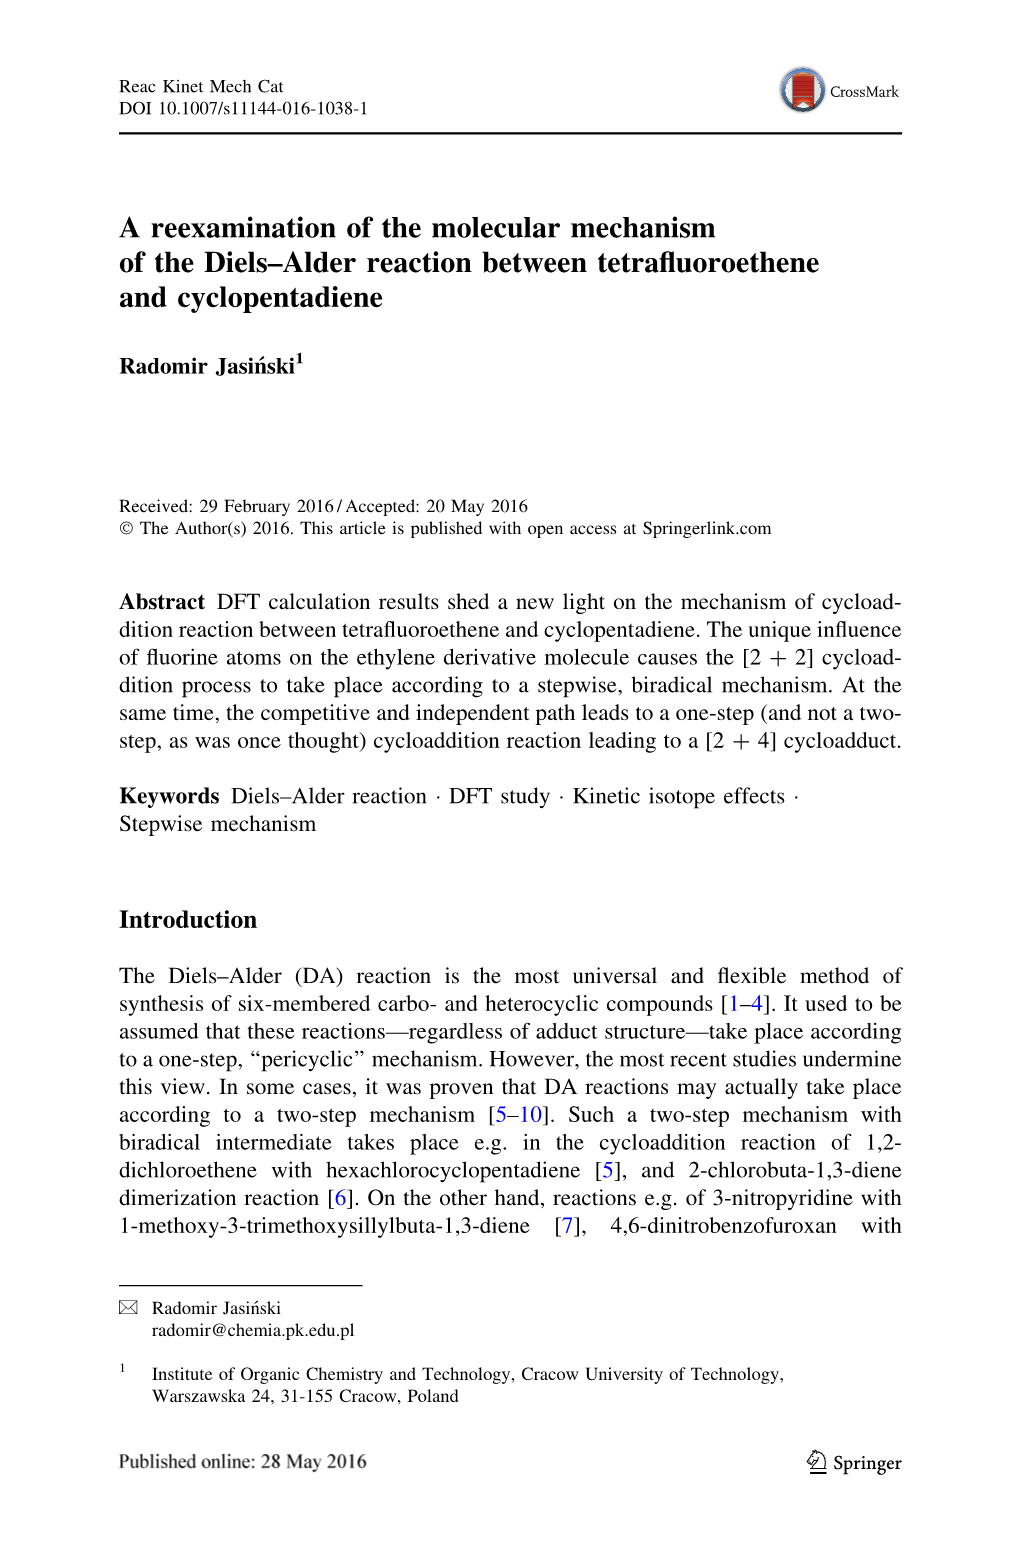 A Reexamination of the Molecular Mechanism of the Diels–Alder Reaction Between Tetrafluoroethene and Cyclopentadiene